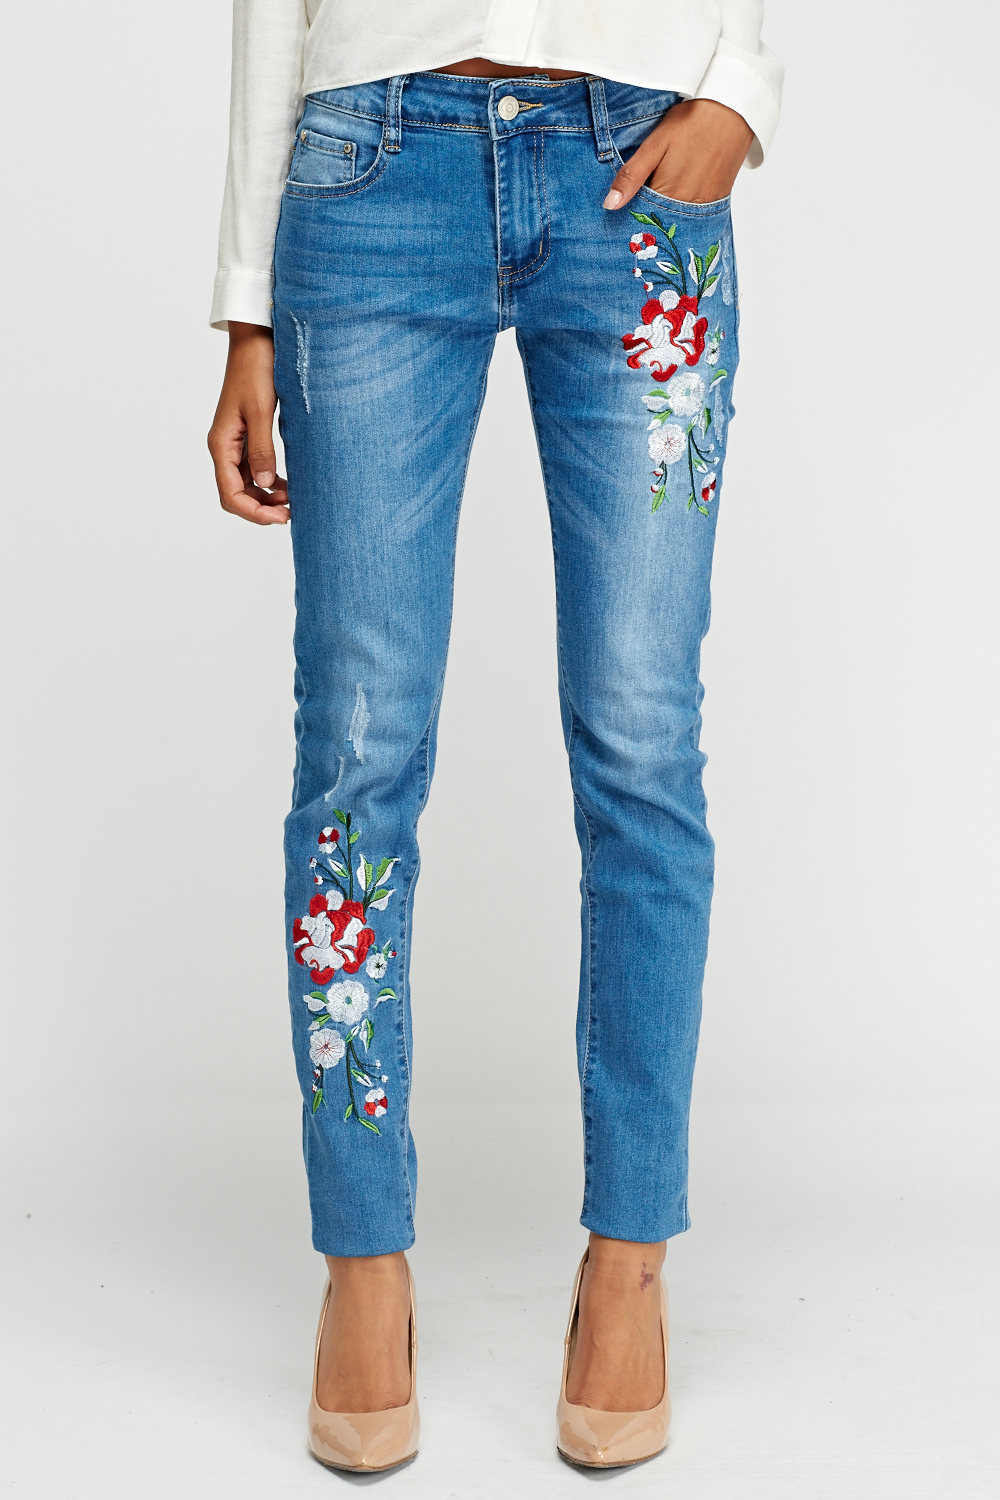 By Swan Applique Denim Blue Jeans - Limited edition | Discount Designer ...